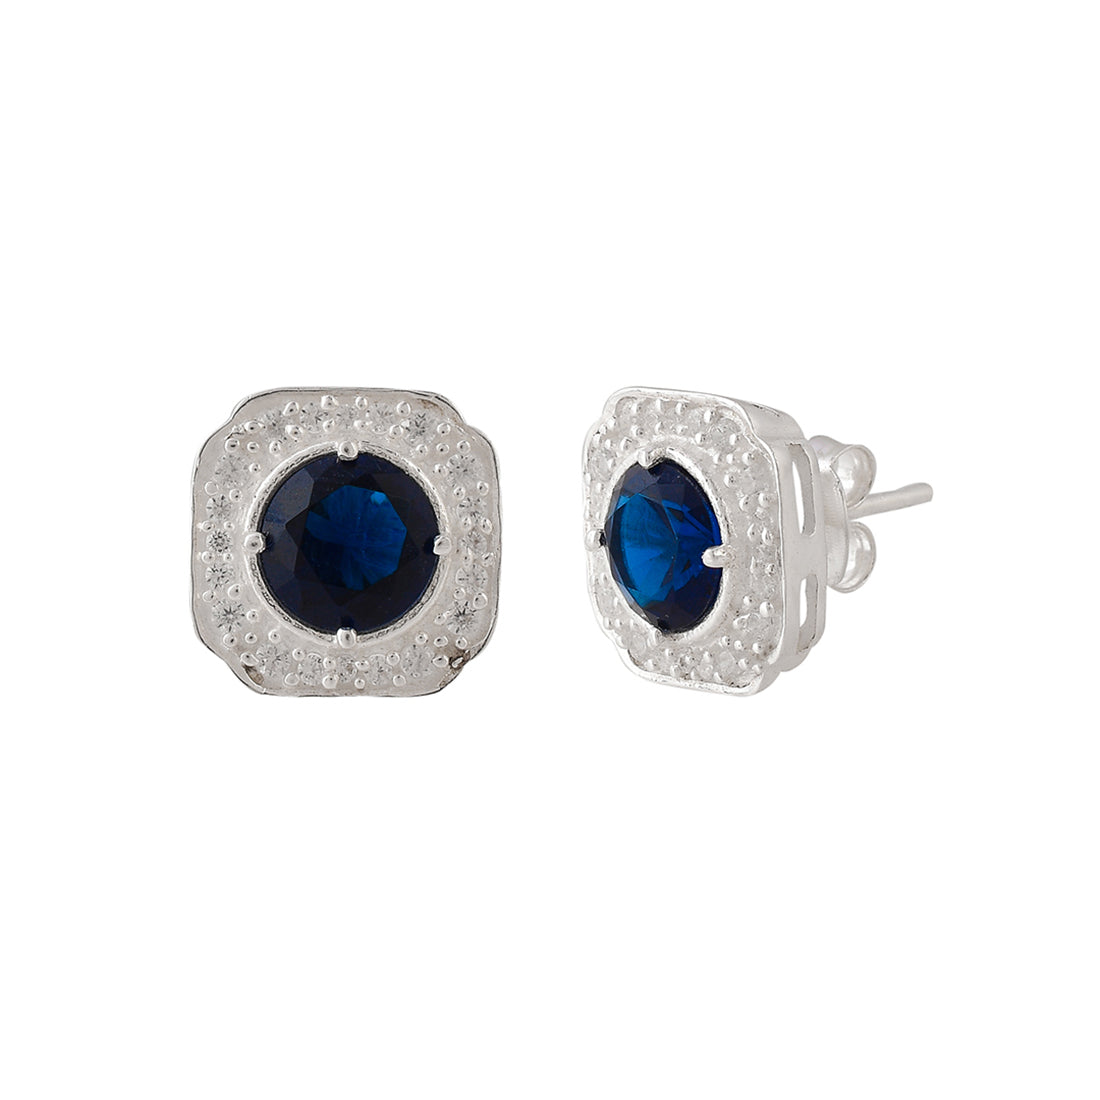 Women's Oval Cut Sapphire And Zirconia Adorned 925 Sterling Silver Stud Earrings - Voylla